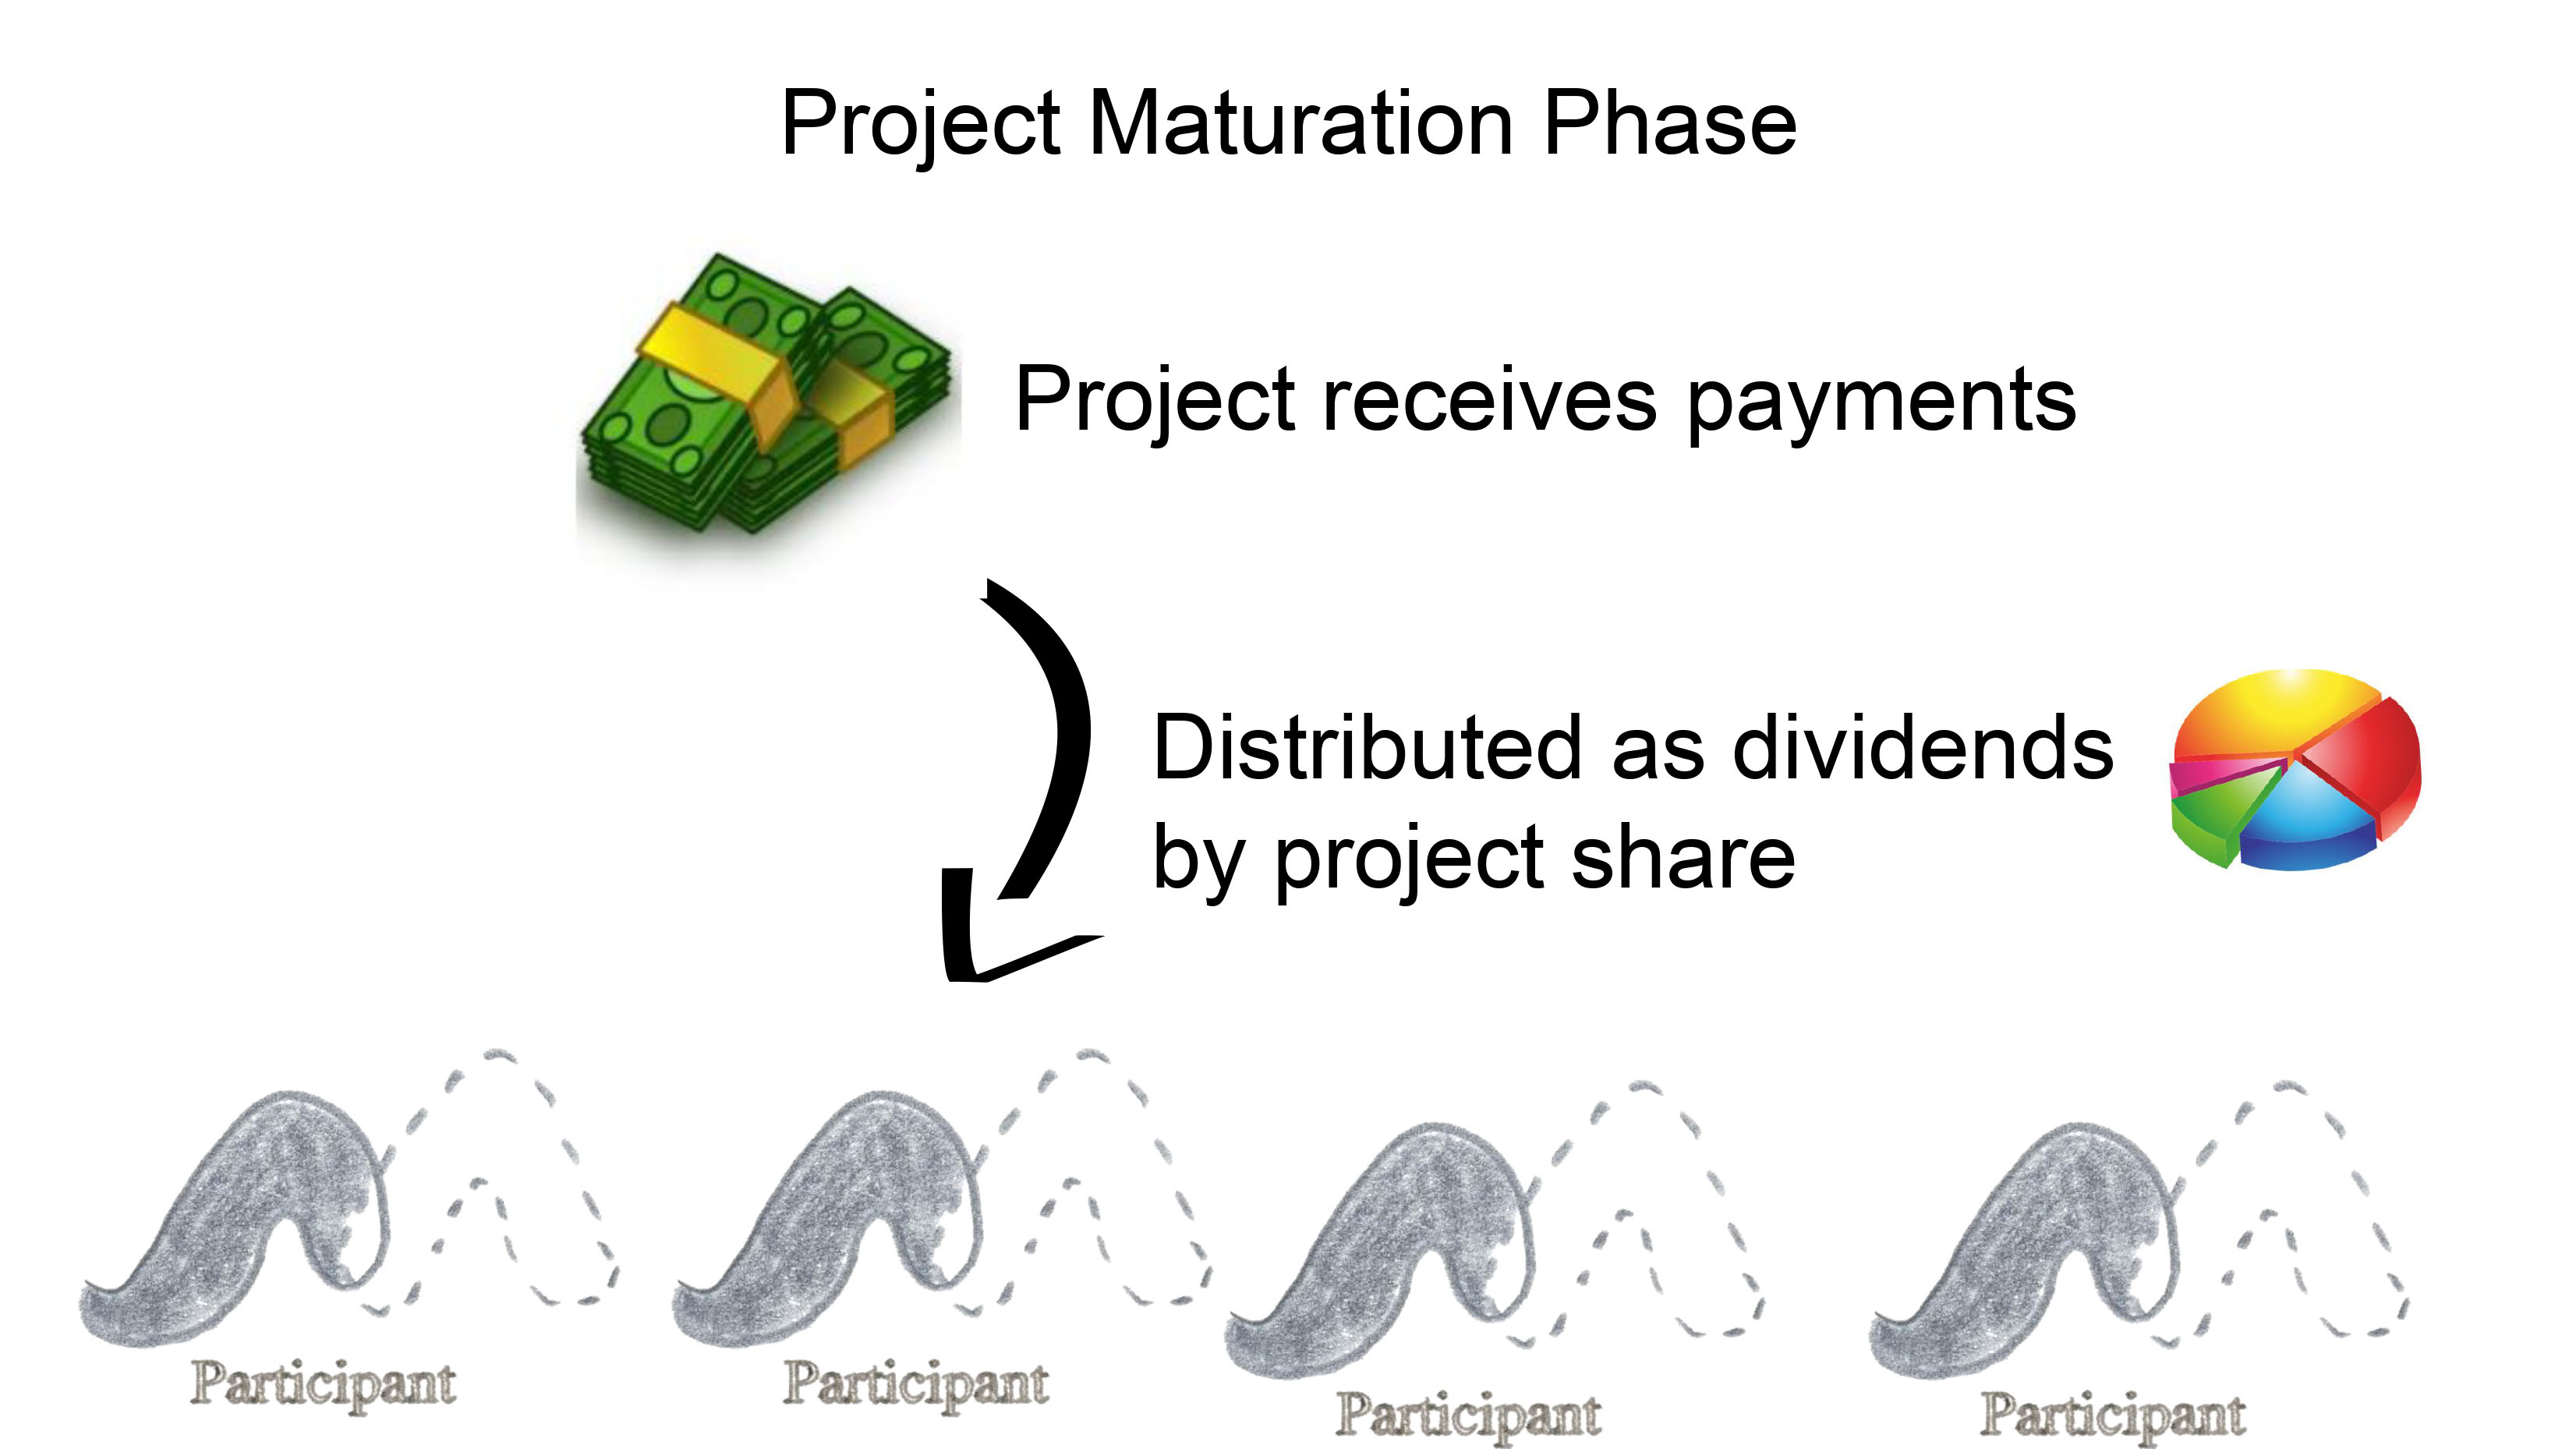 Distribution of proceeds